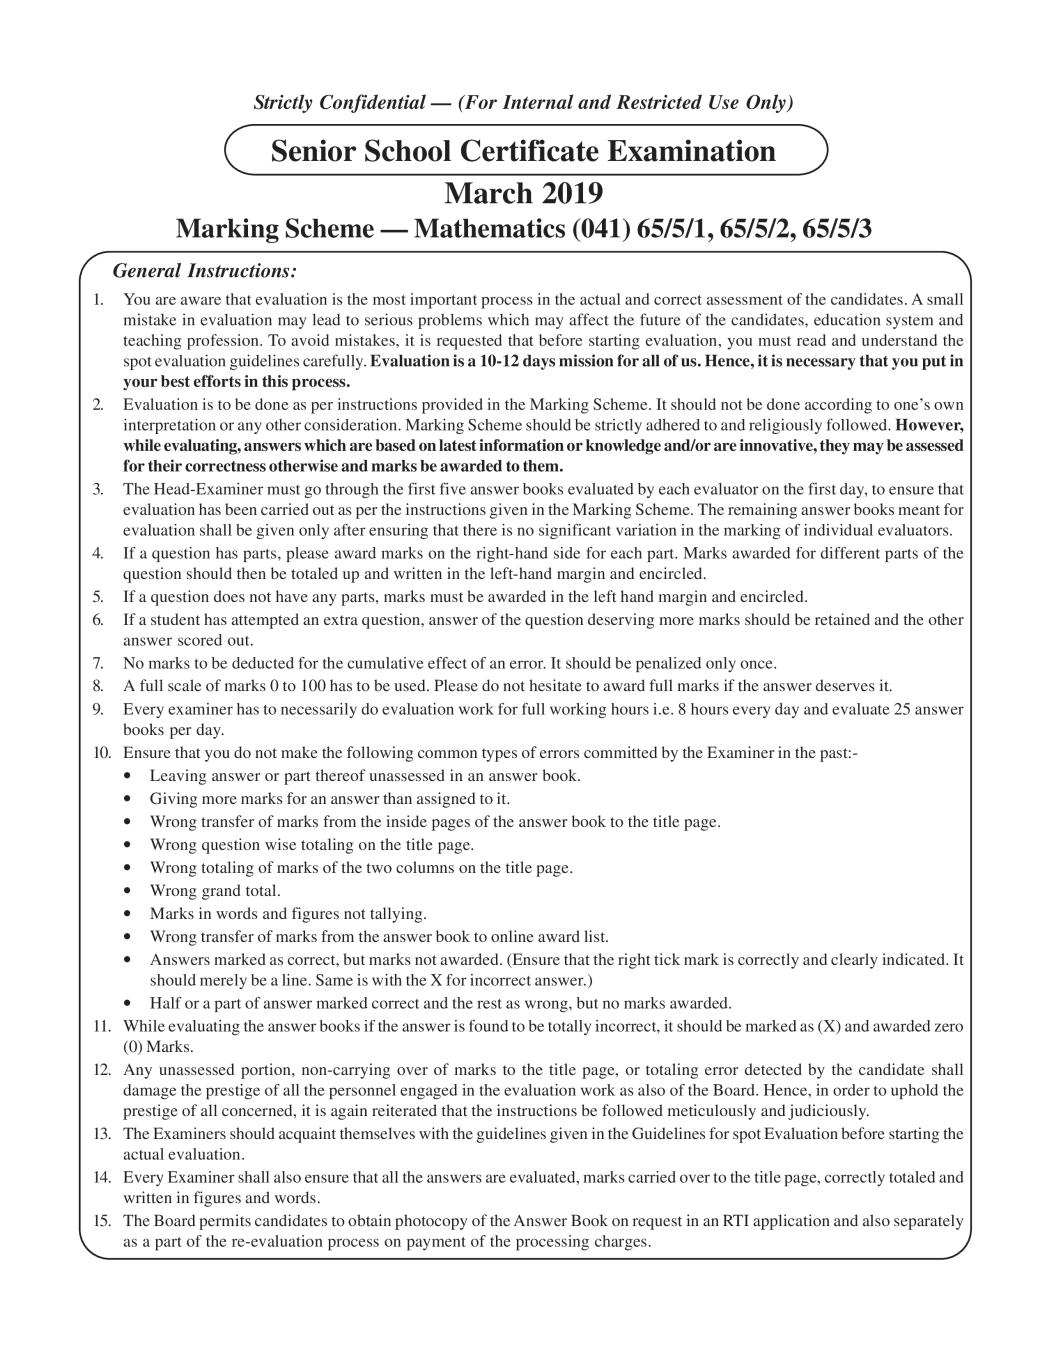 CBSE Class 12 Mathematics Question Paper 2019 Set 5 Solutions - Page 1